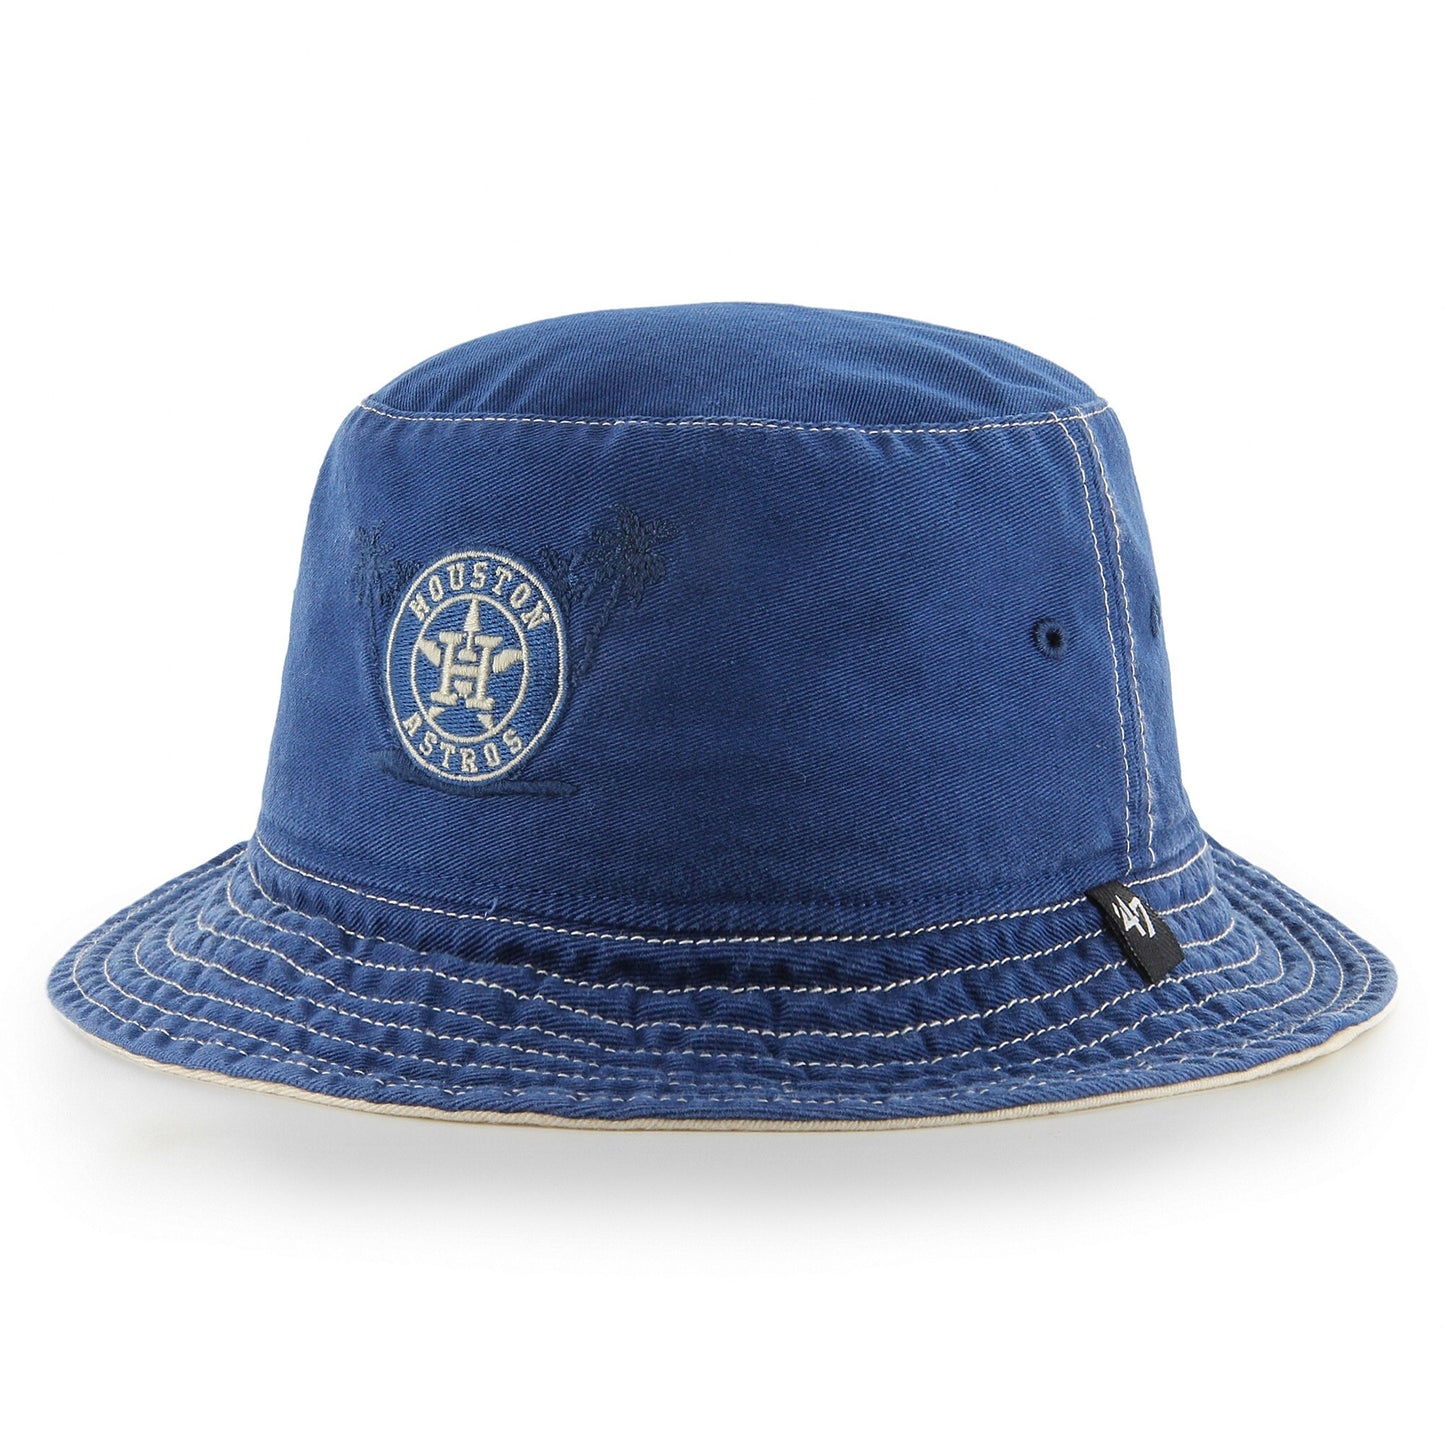 Houston Astros '47 Trailhead Bucket Hat - Navy